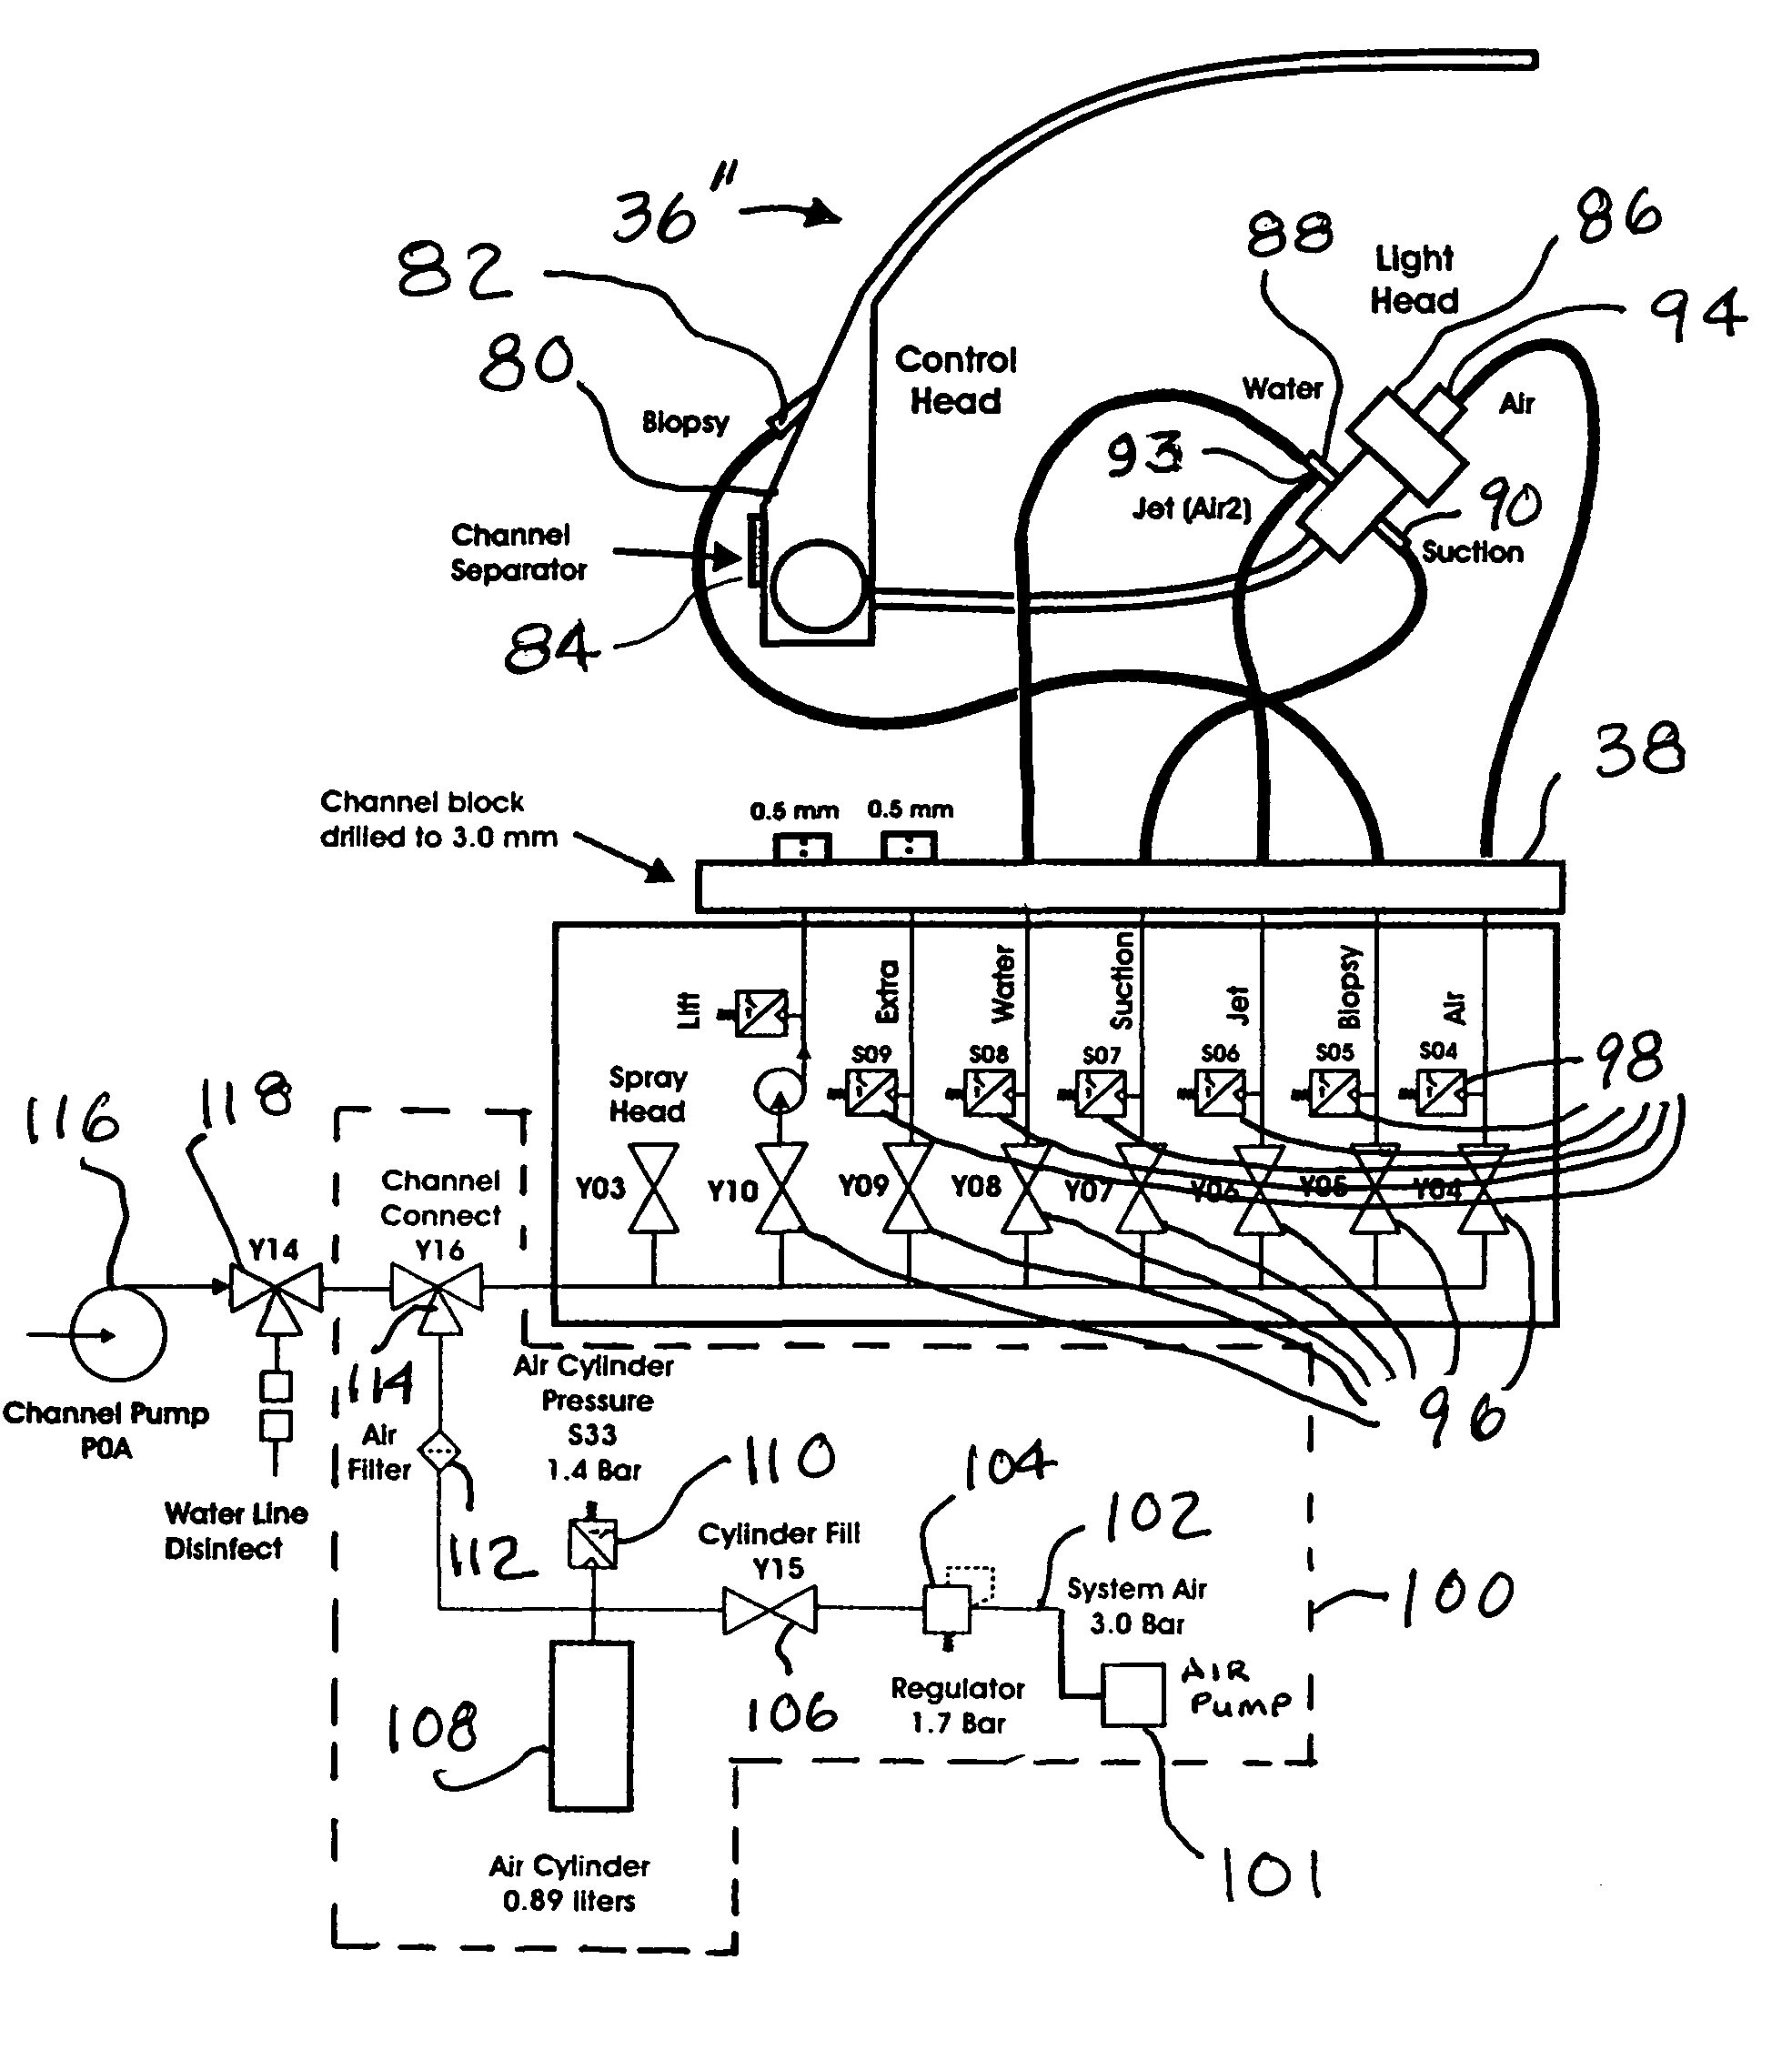 Endoscope reprocessor connectivity apparatus and method